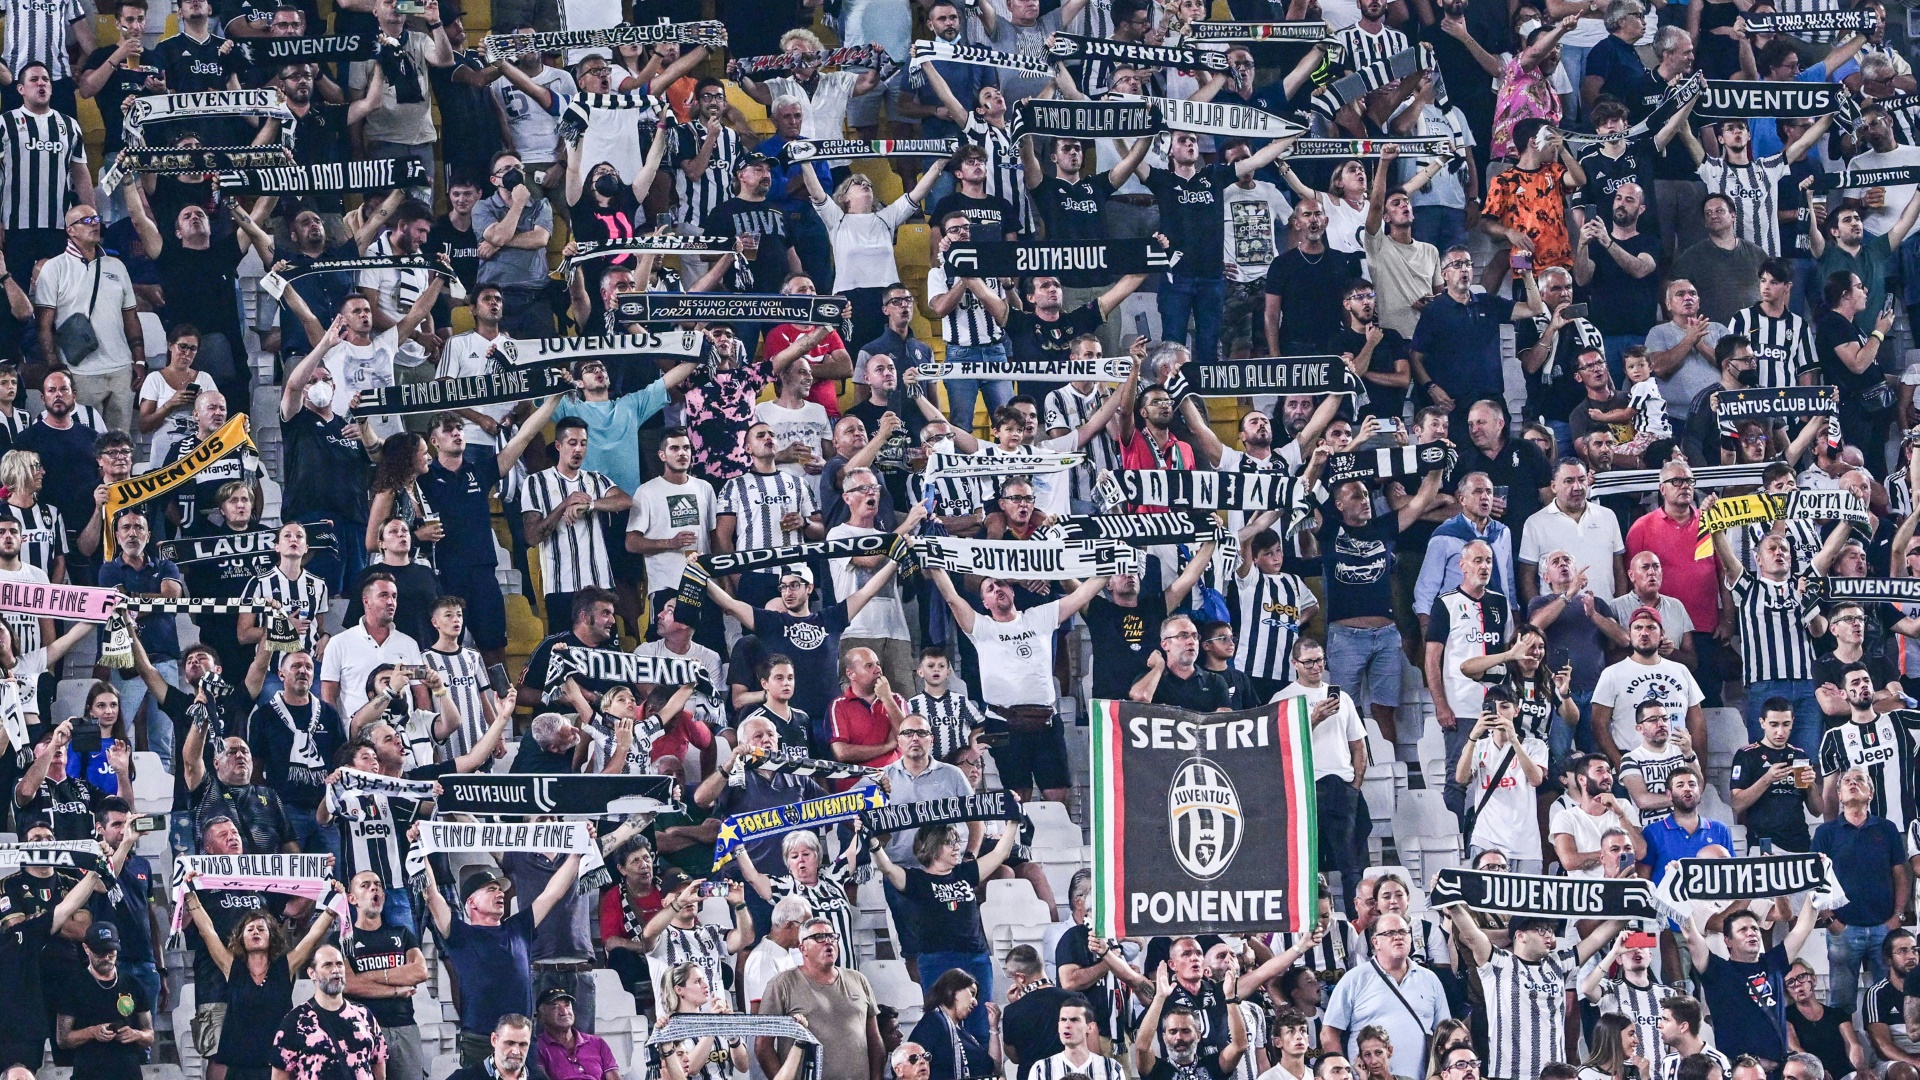 171 Juve-Fans bekommen nach einem Rassismus-Eklat Stadionverbot